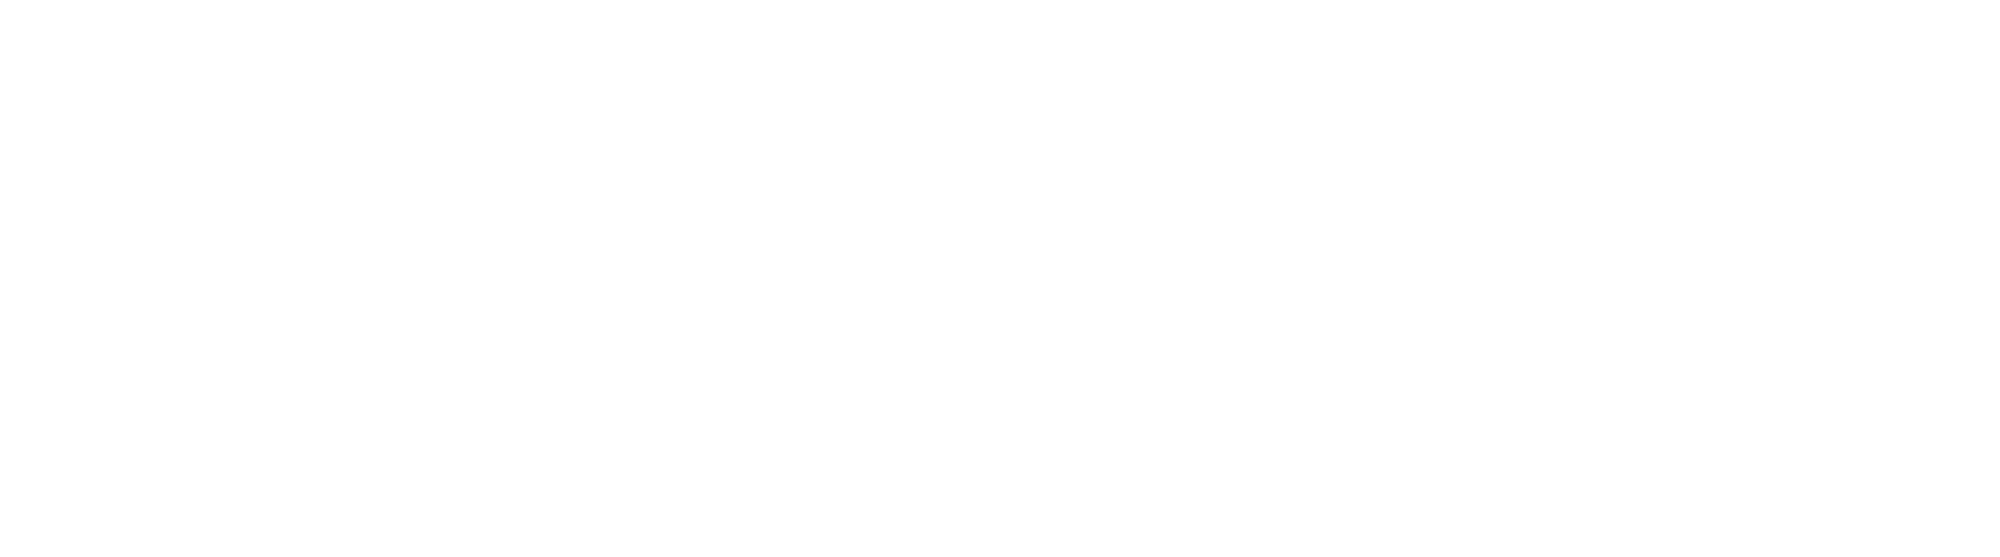 Logo konzeption